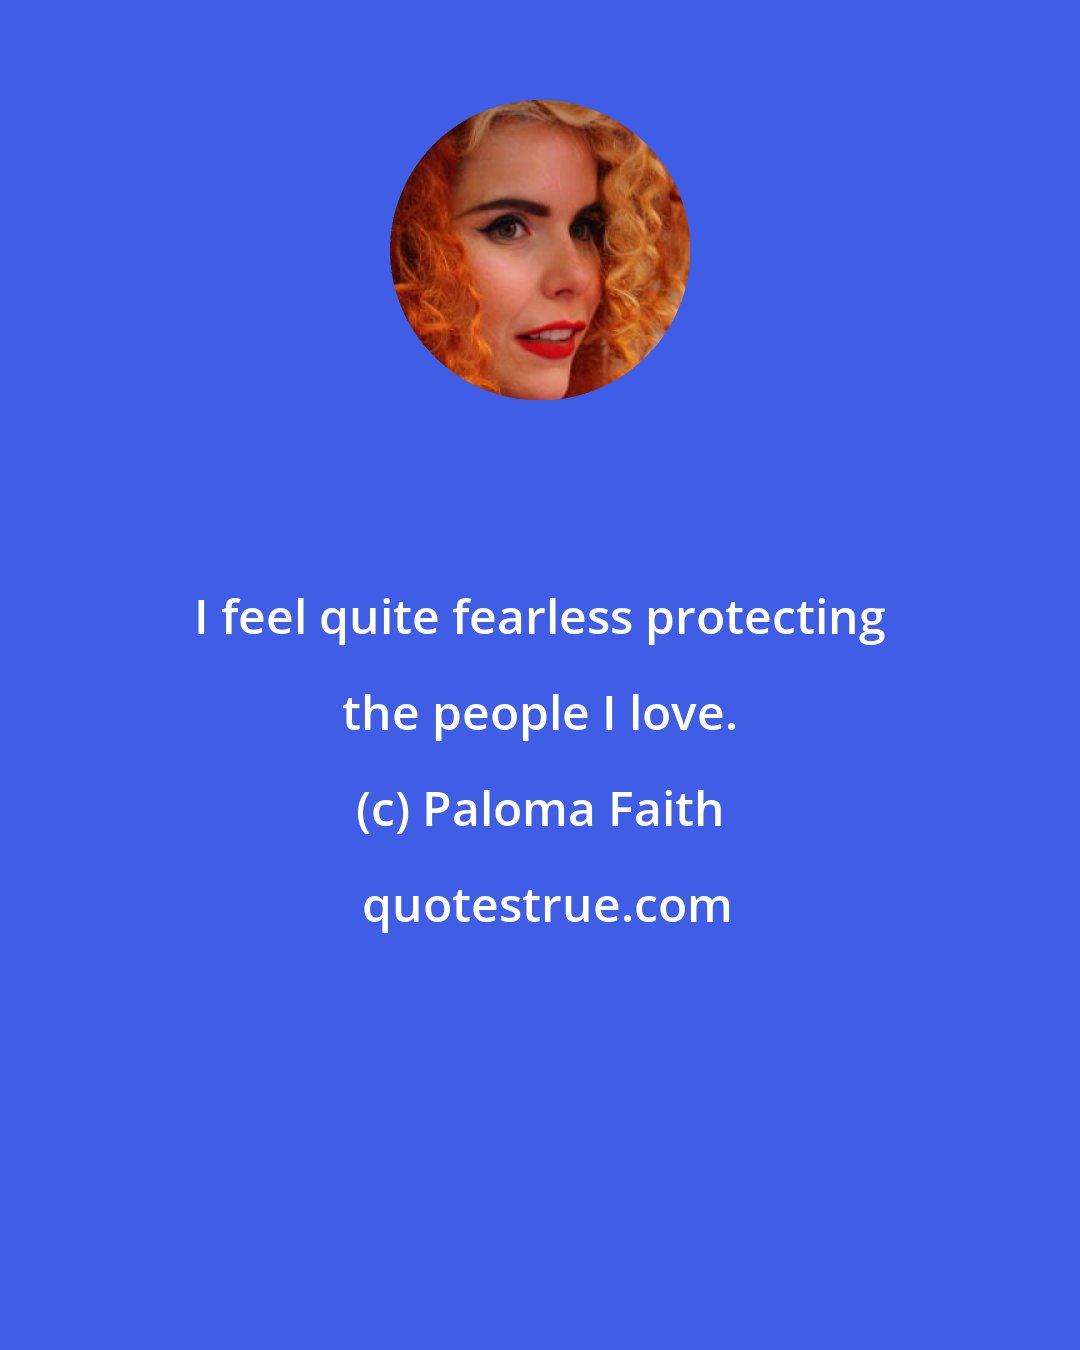 Paloma Faith: I feel quite fearless protecting the people I love.